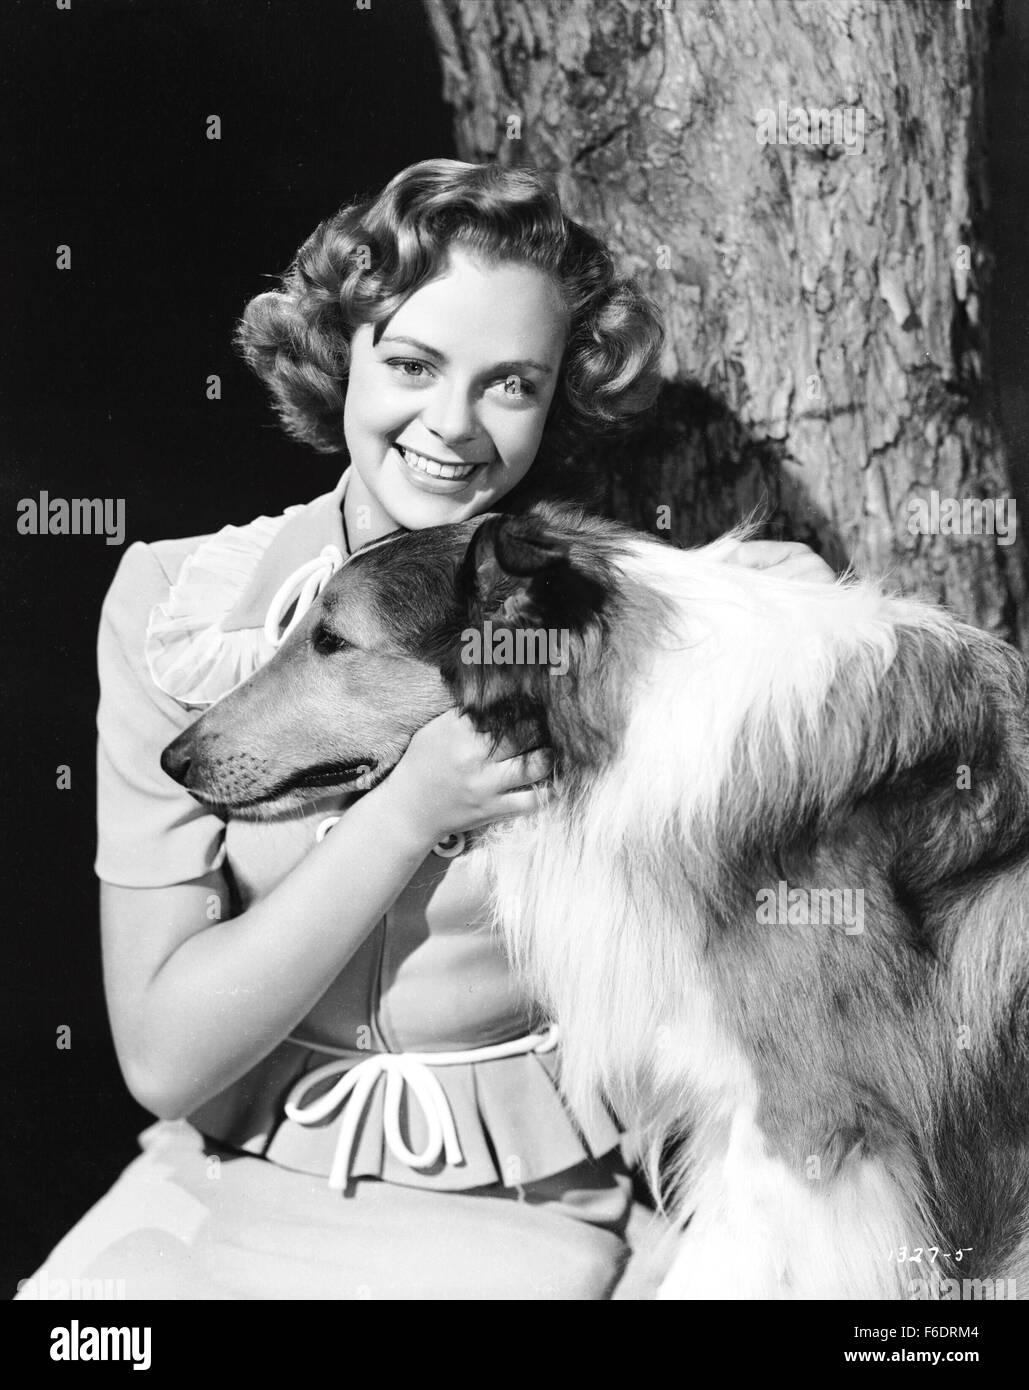 RELEASE DATE: April 20, 1945. MOVIE TITLE: Son of Lassie. STUDIO: Metro-Goldwyn-Mayer (MGM). PLOT: . PICTURED: LASSIE as Lassie and JUNE LOCKHART as Priscilla. Stock Photo